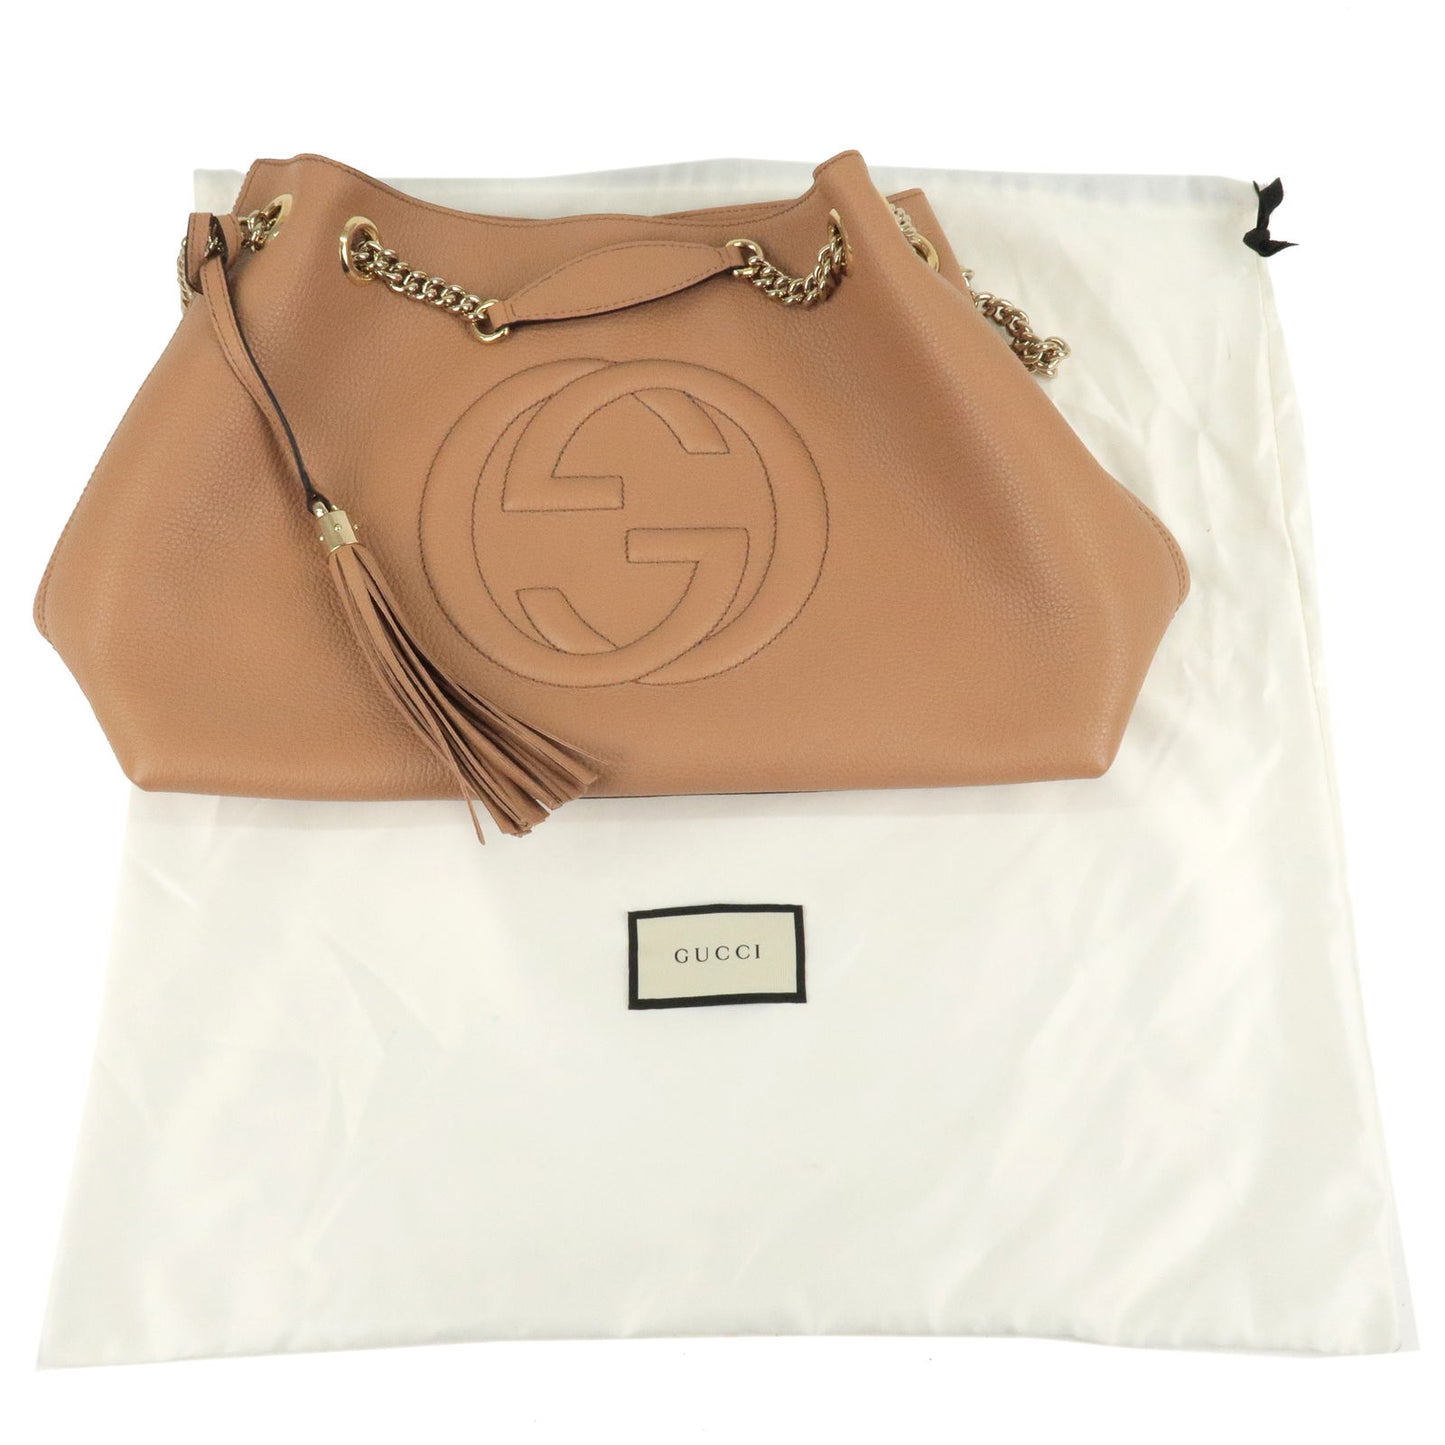 GUCCI SOHO Leather Chain Shoulder Bag Tote Bag Beige 536196